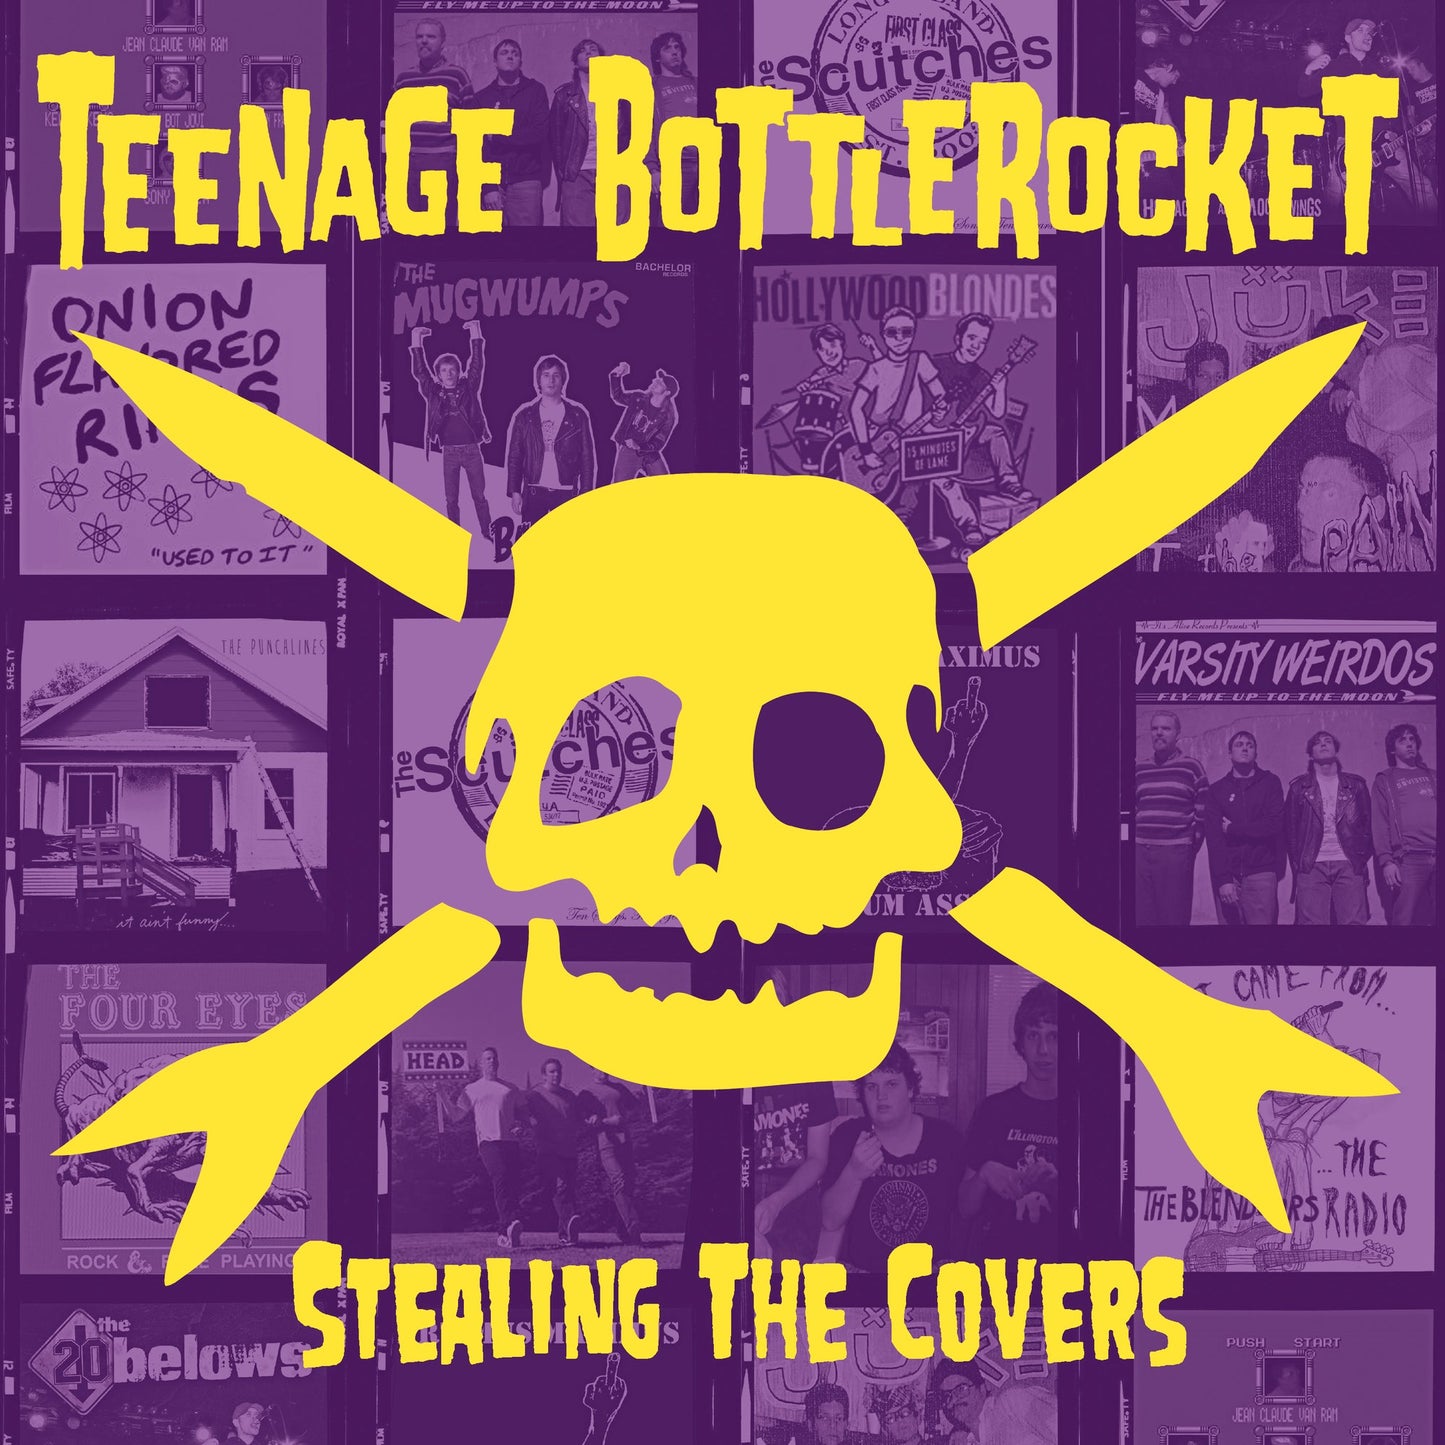 Teenage Bottlerocket "Stealing The Covers" LP